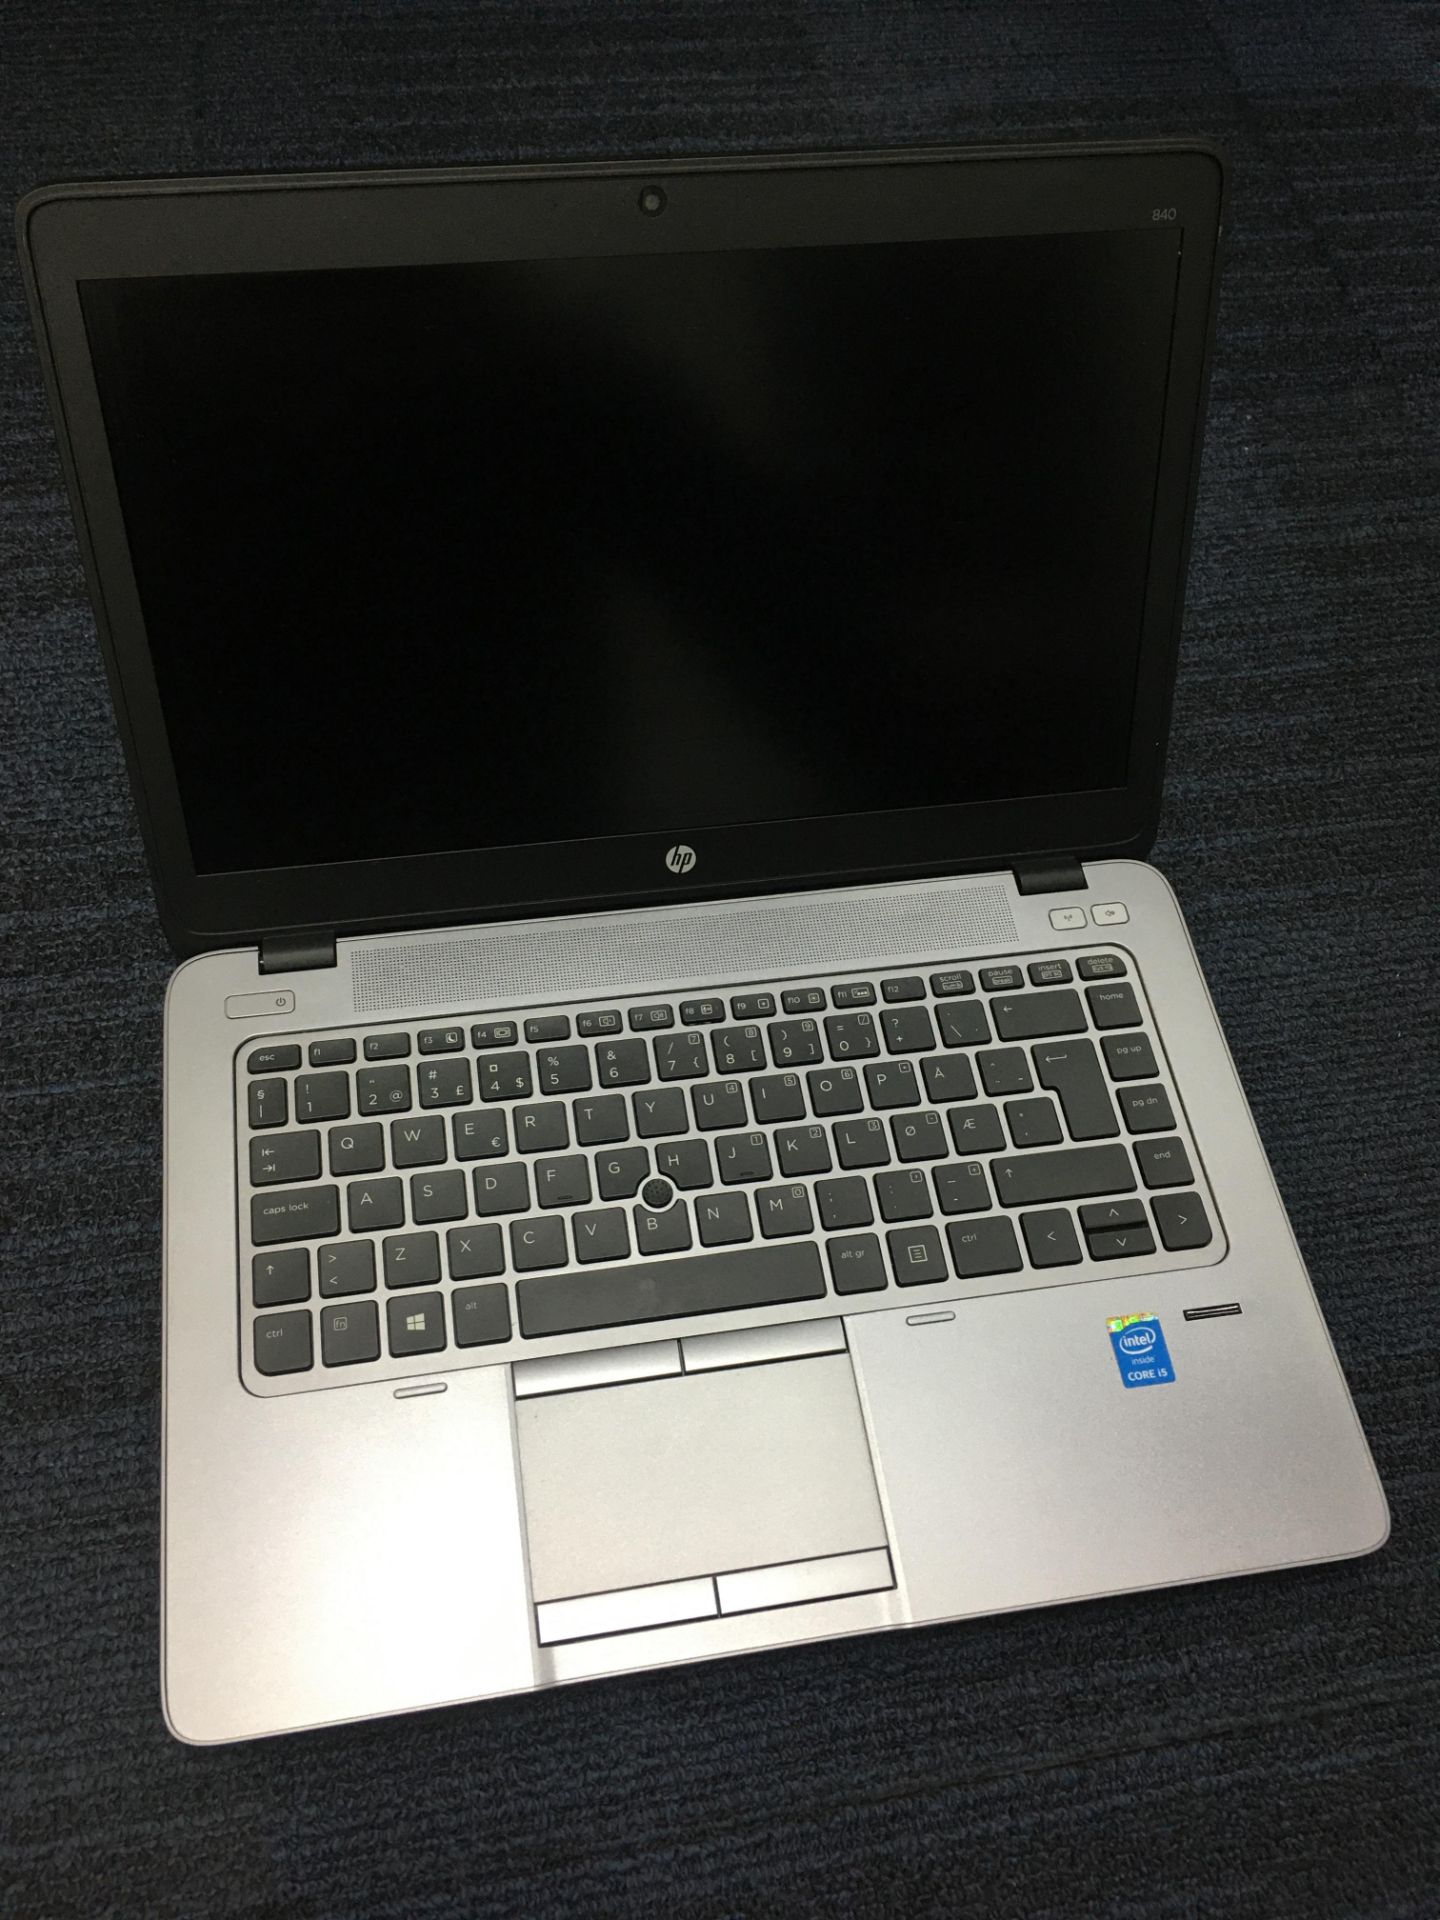 HP EliteBook 840 core i5 blue label - Image 2 of 3